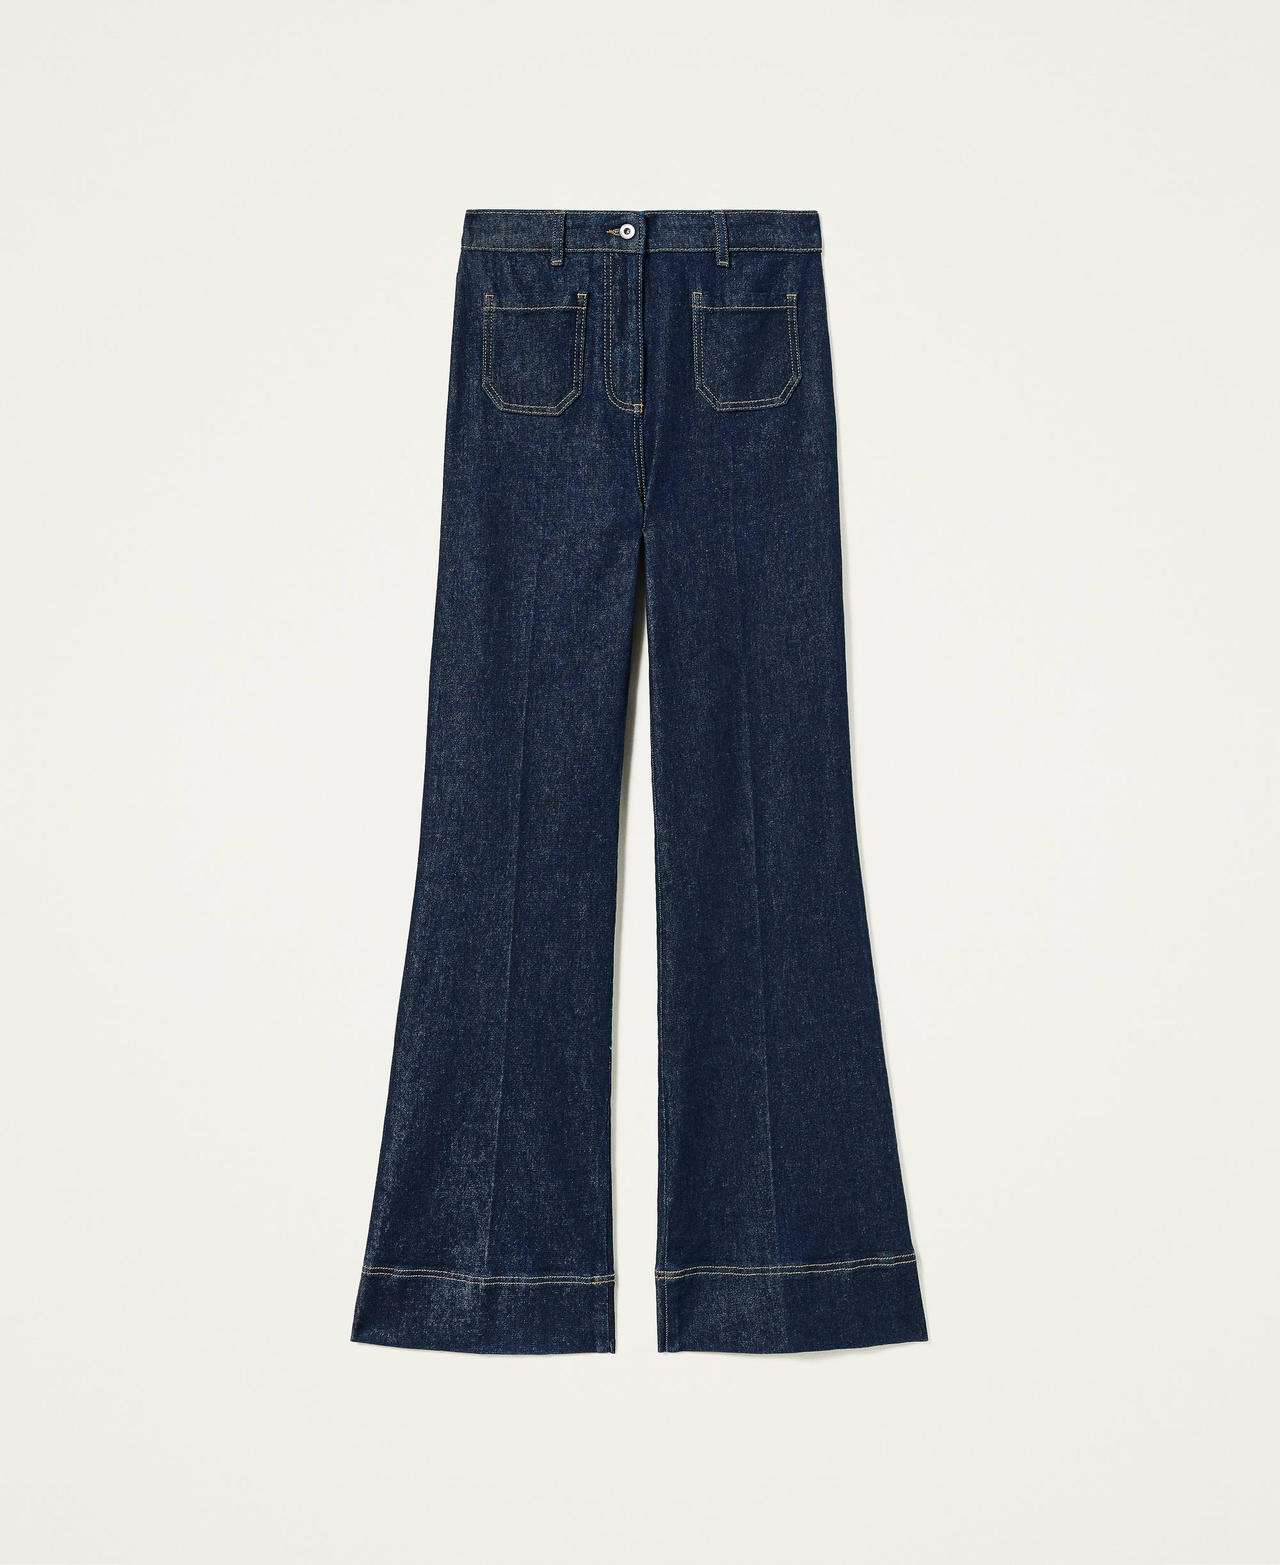 Bell bottom ‘Gold’ jeans Rinsed Denim Woman 212AP2135-0S